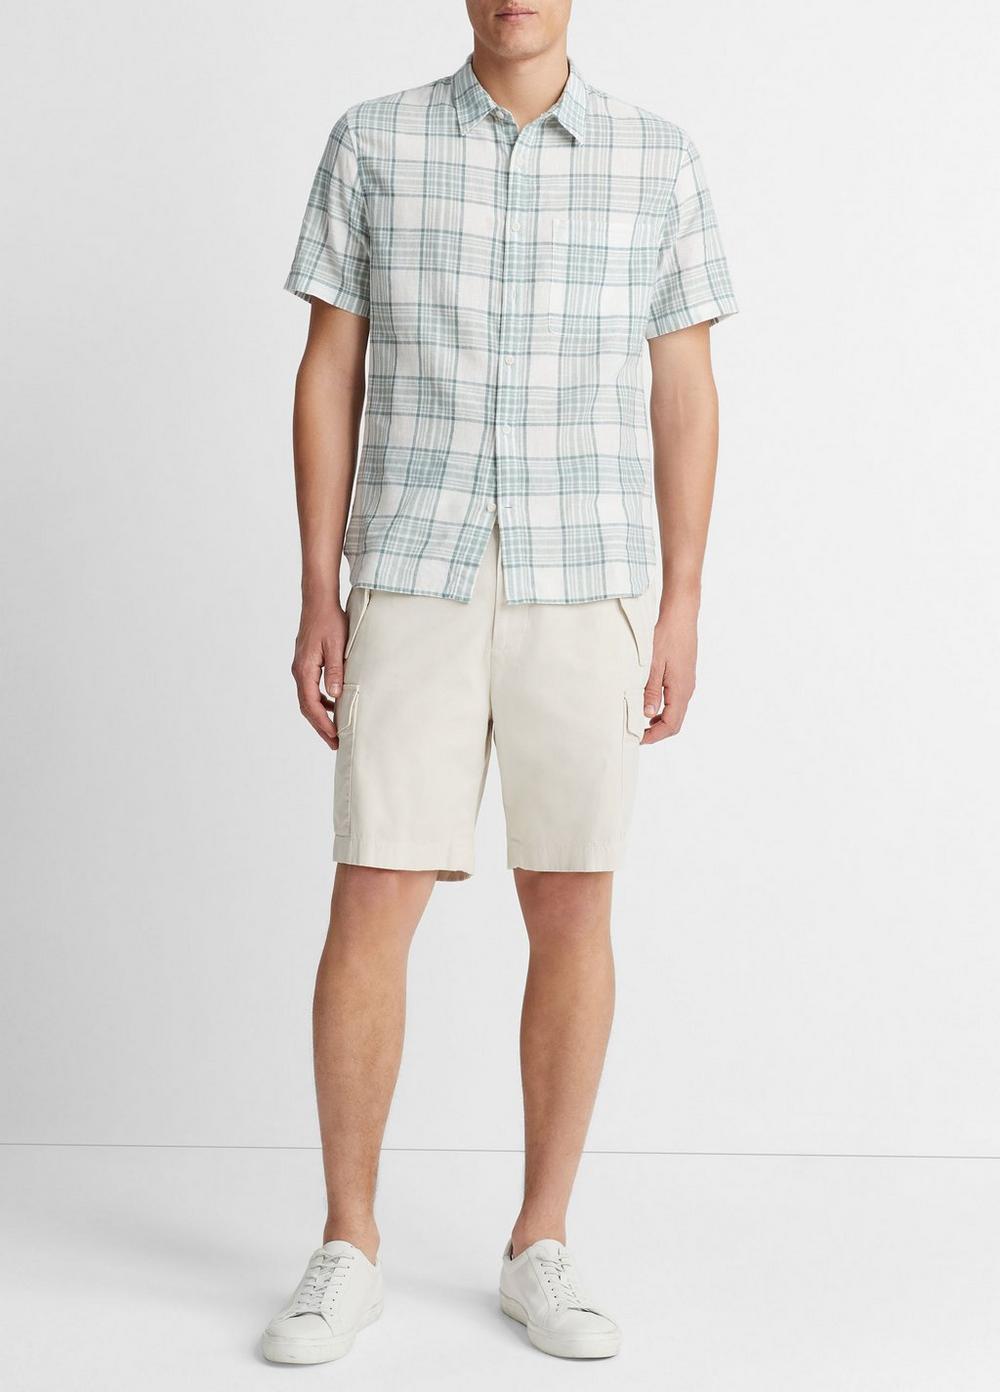 Kino Plaid Linen-cotton Short-Sleeve Shirt, Mirage Teal/optic White, Size S Vince